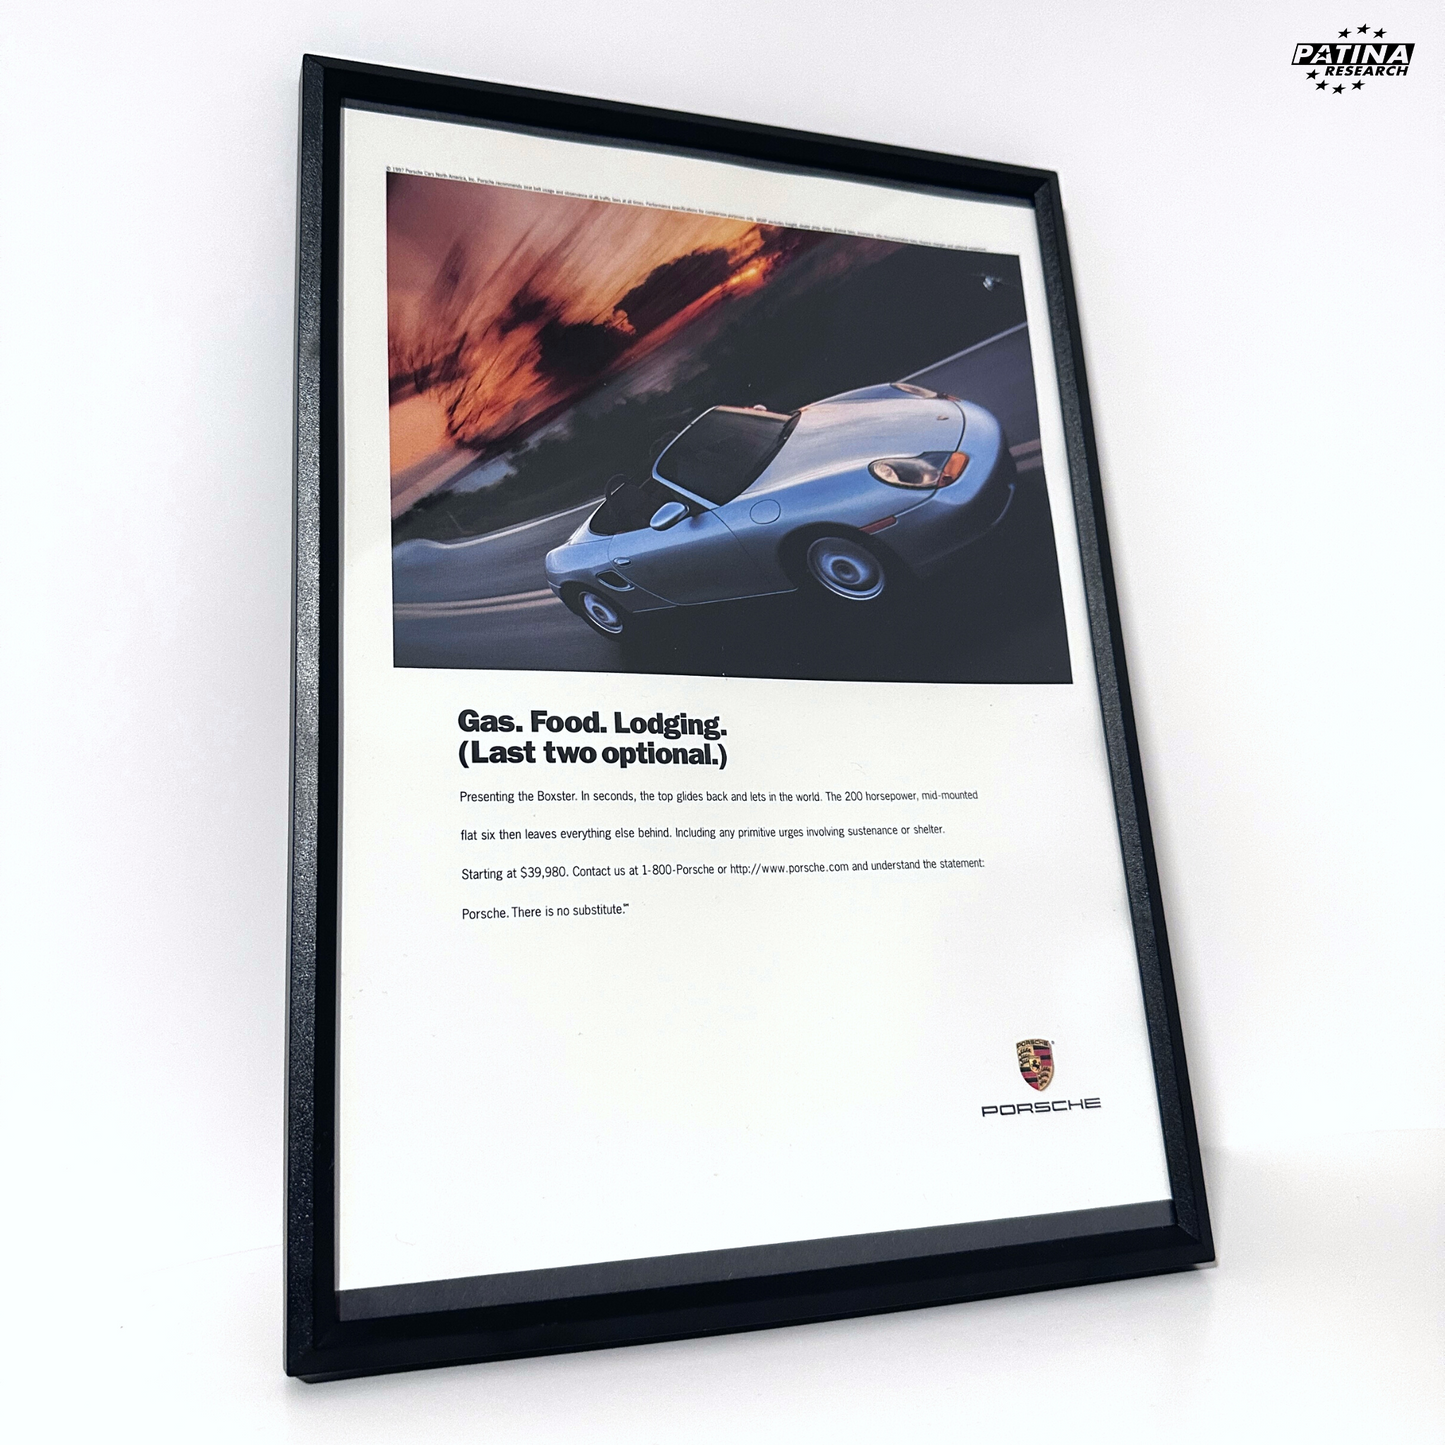 Porsche gas food lodging framed ad